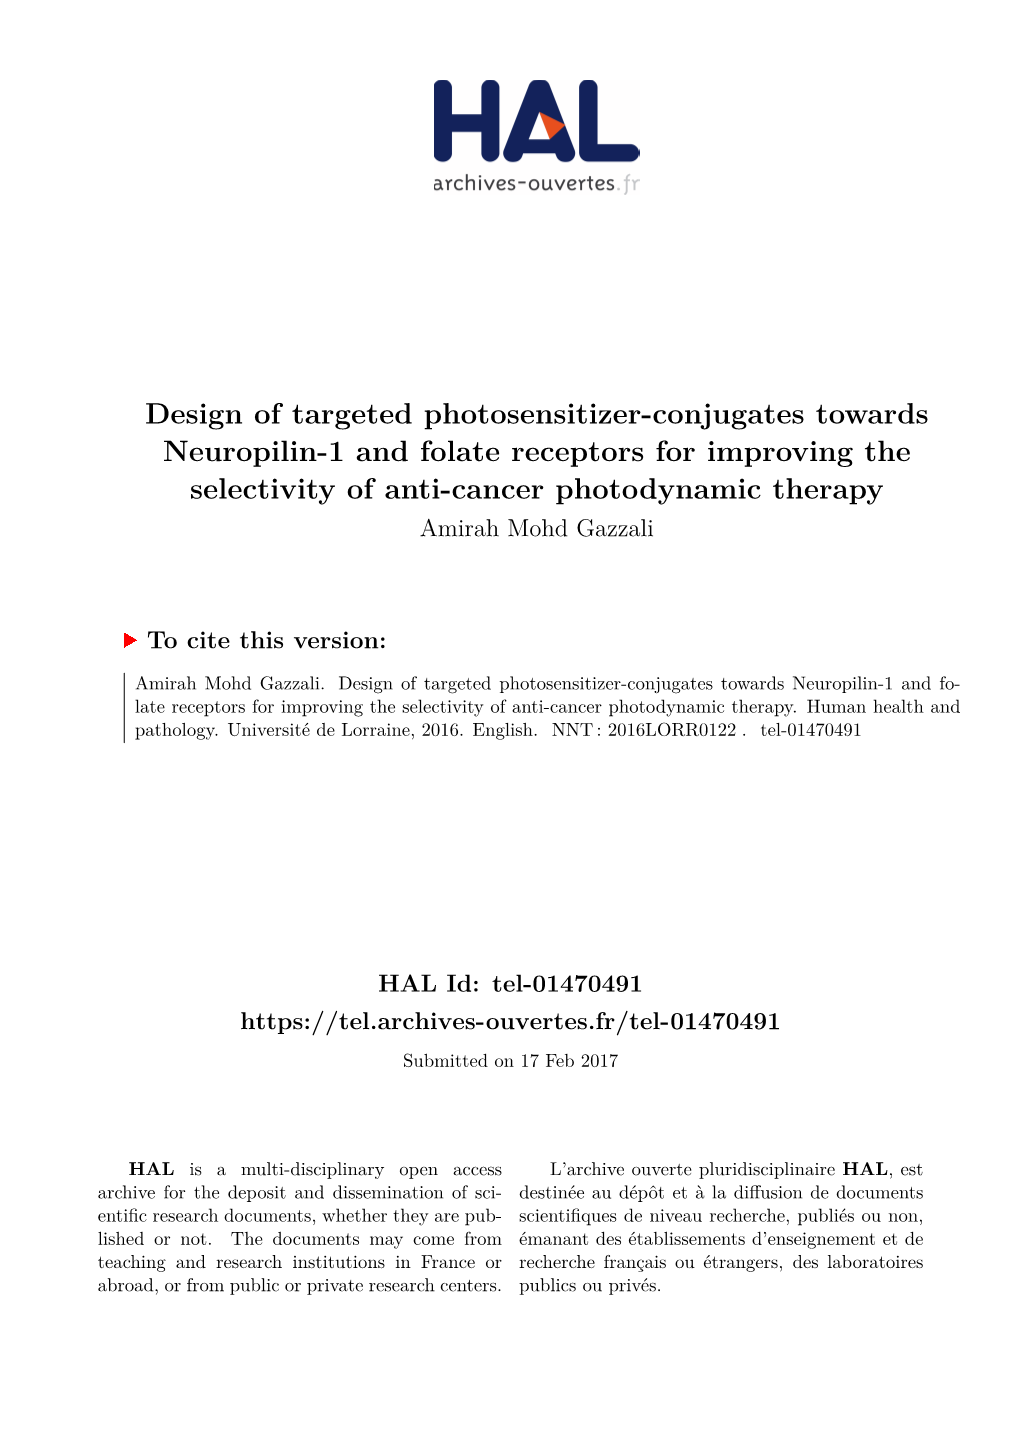 Design of Targeted Photosensitizer-Conjugates Towards